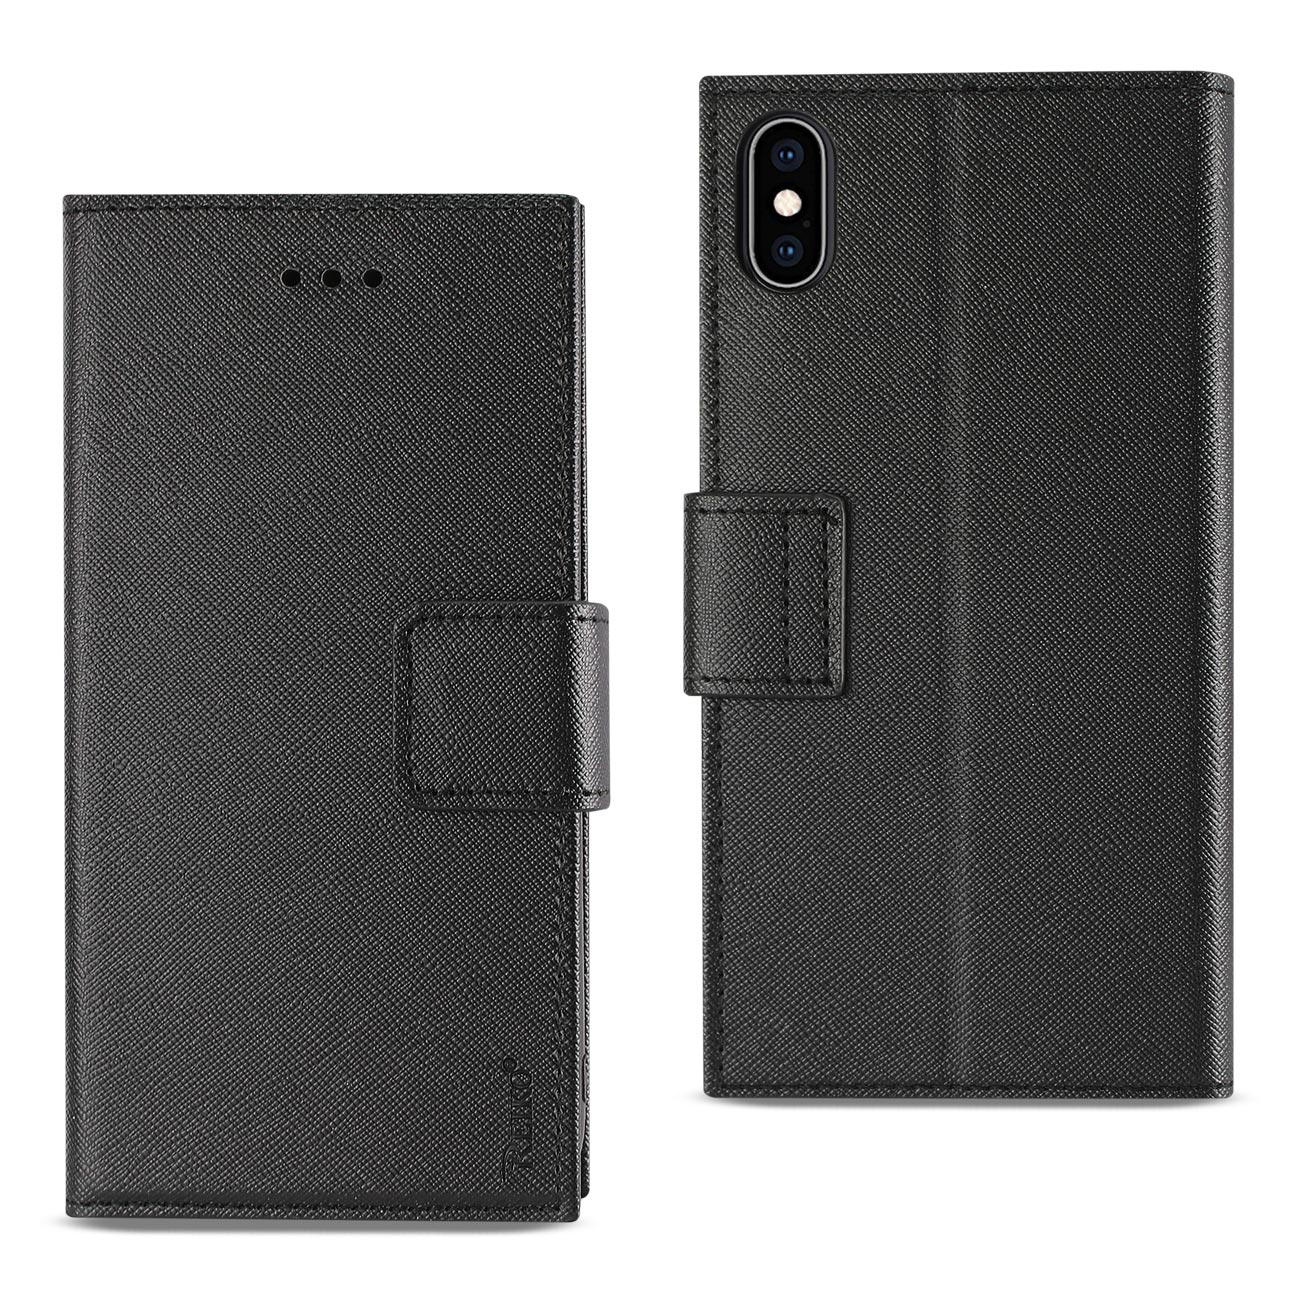 Reiko iPhone XS MAX 3-In-1 Wallet Case In Black